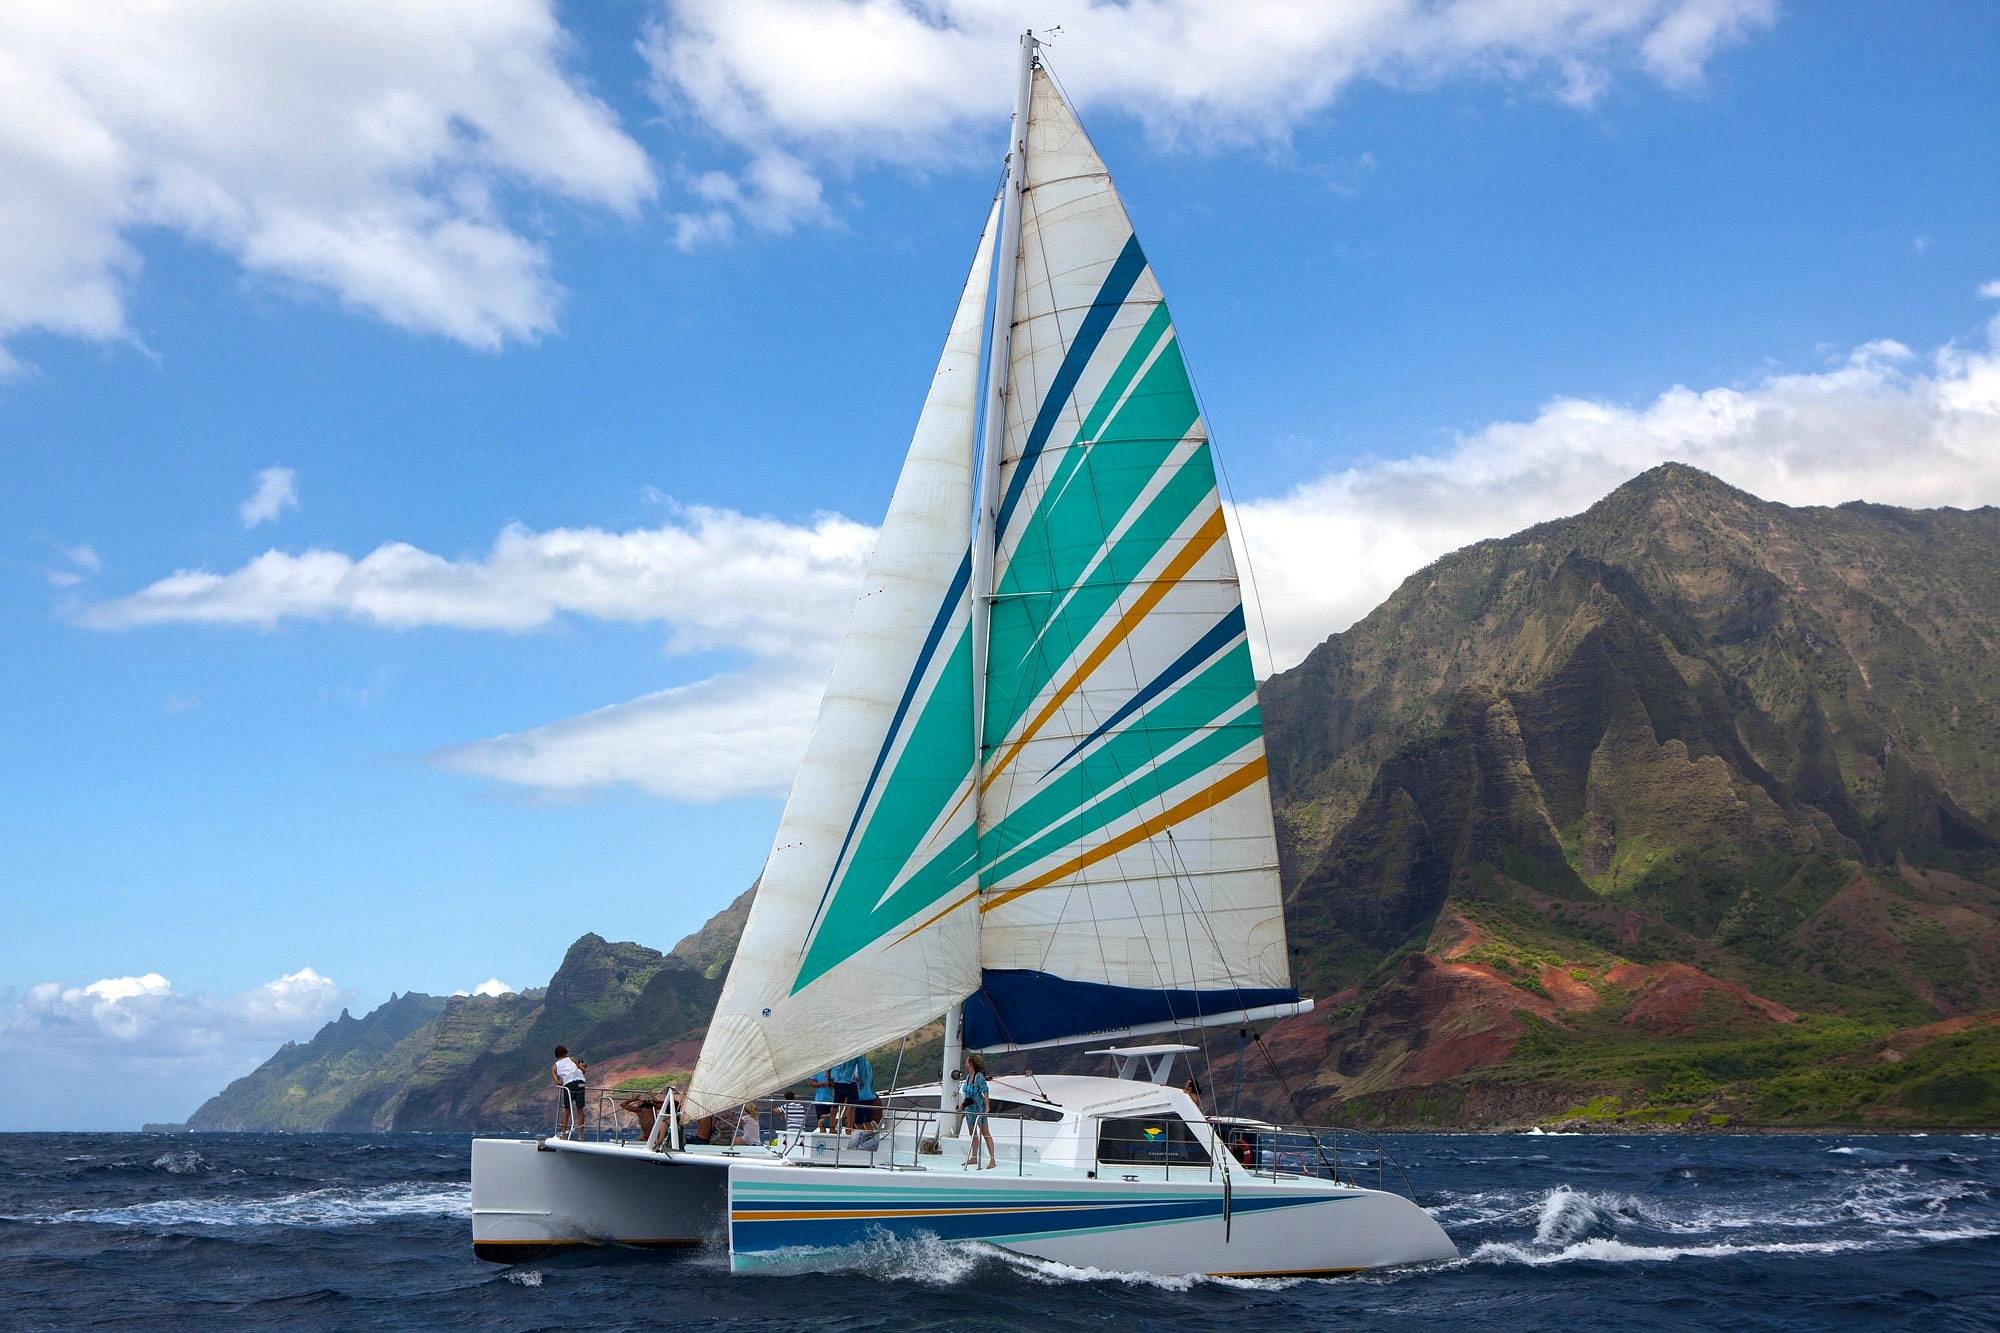 holoholo kauai boat tours promo code